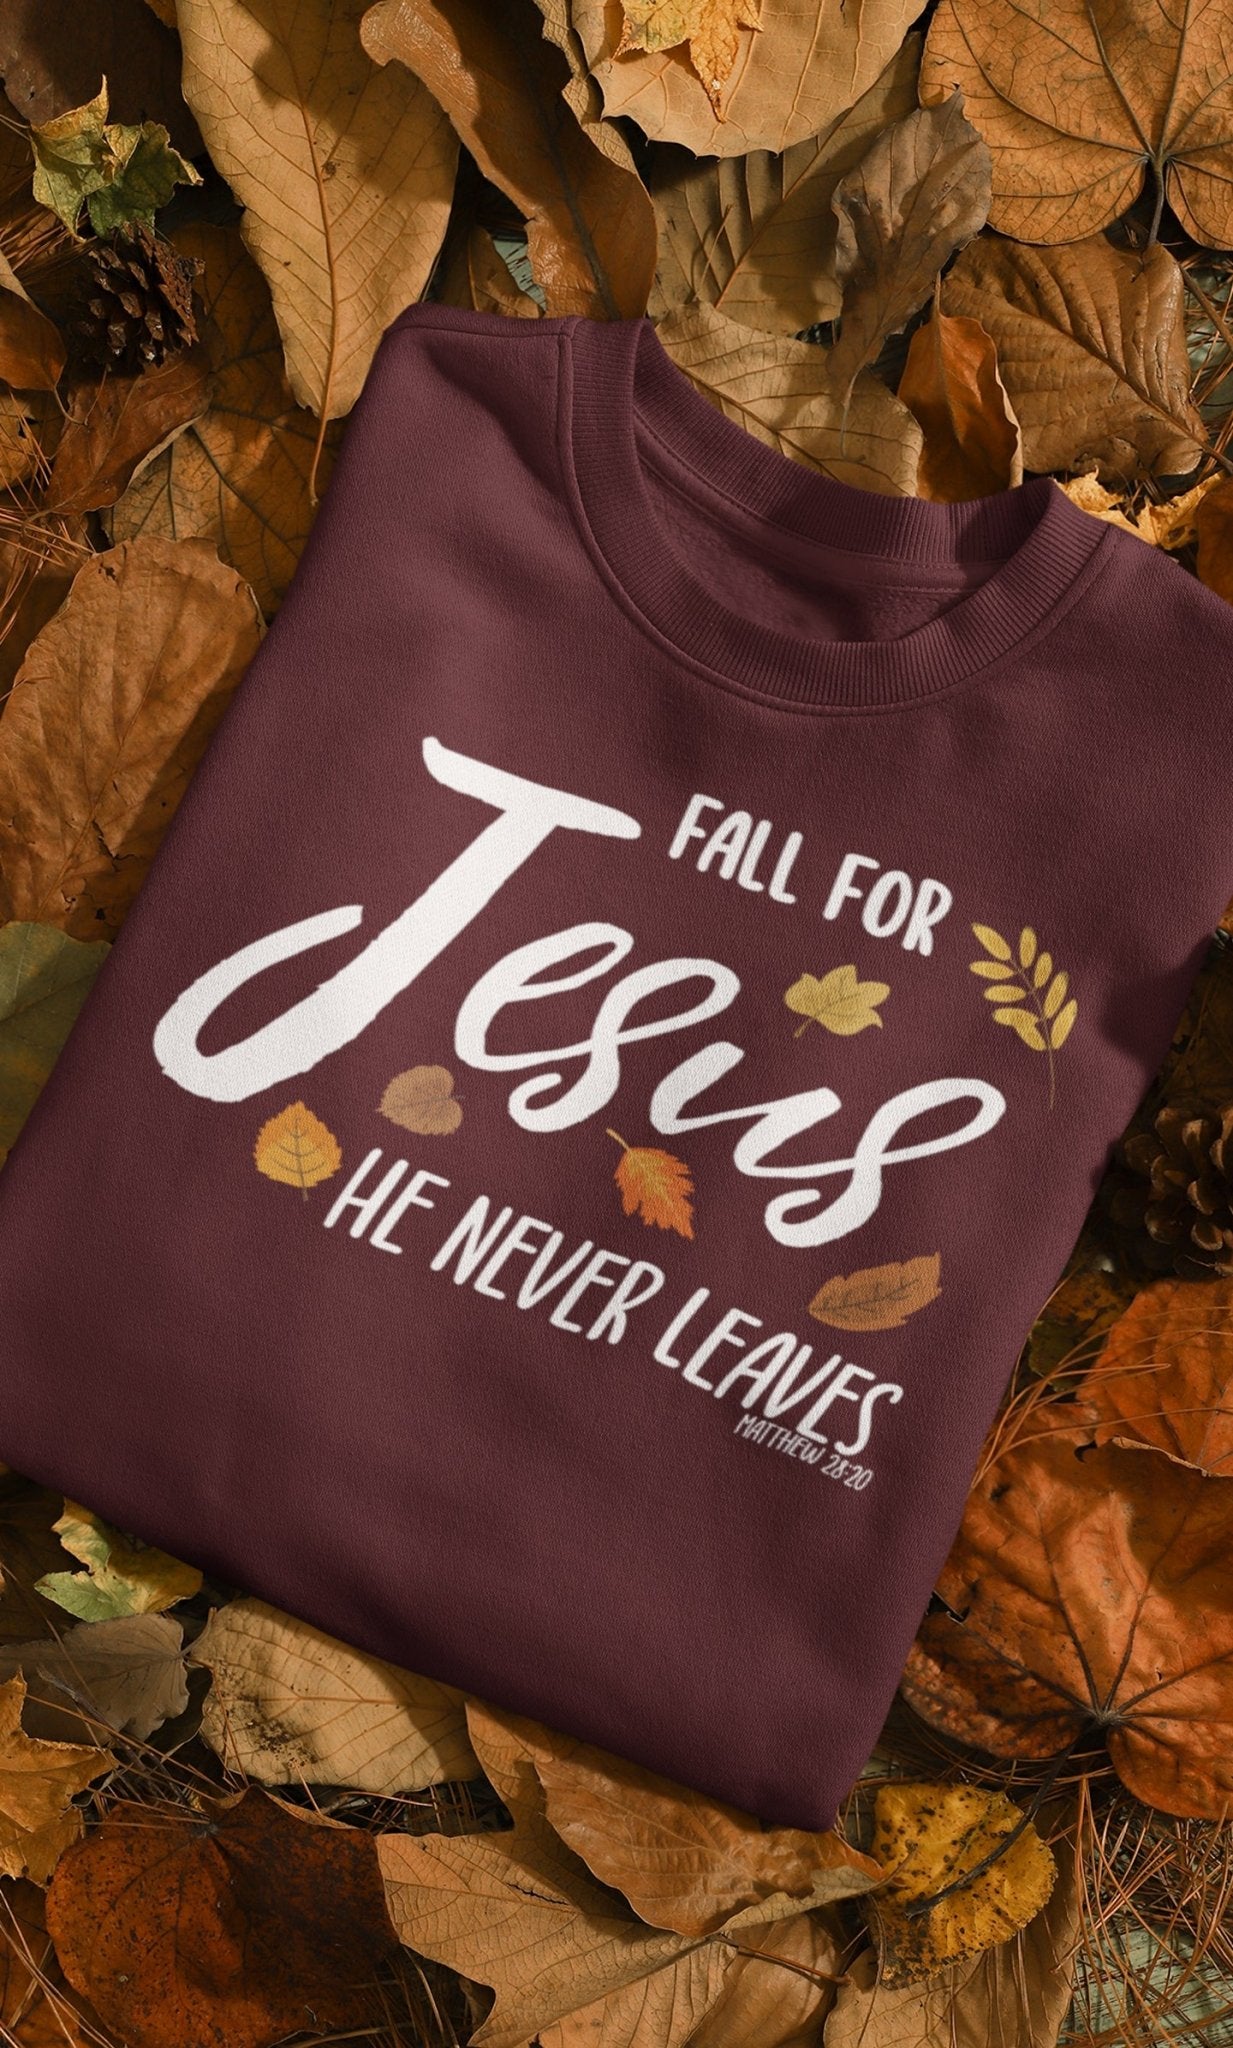 Fall For Jesus - Sweatshirt - Trini-T Ministries